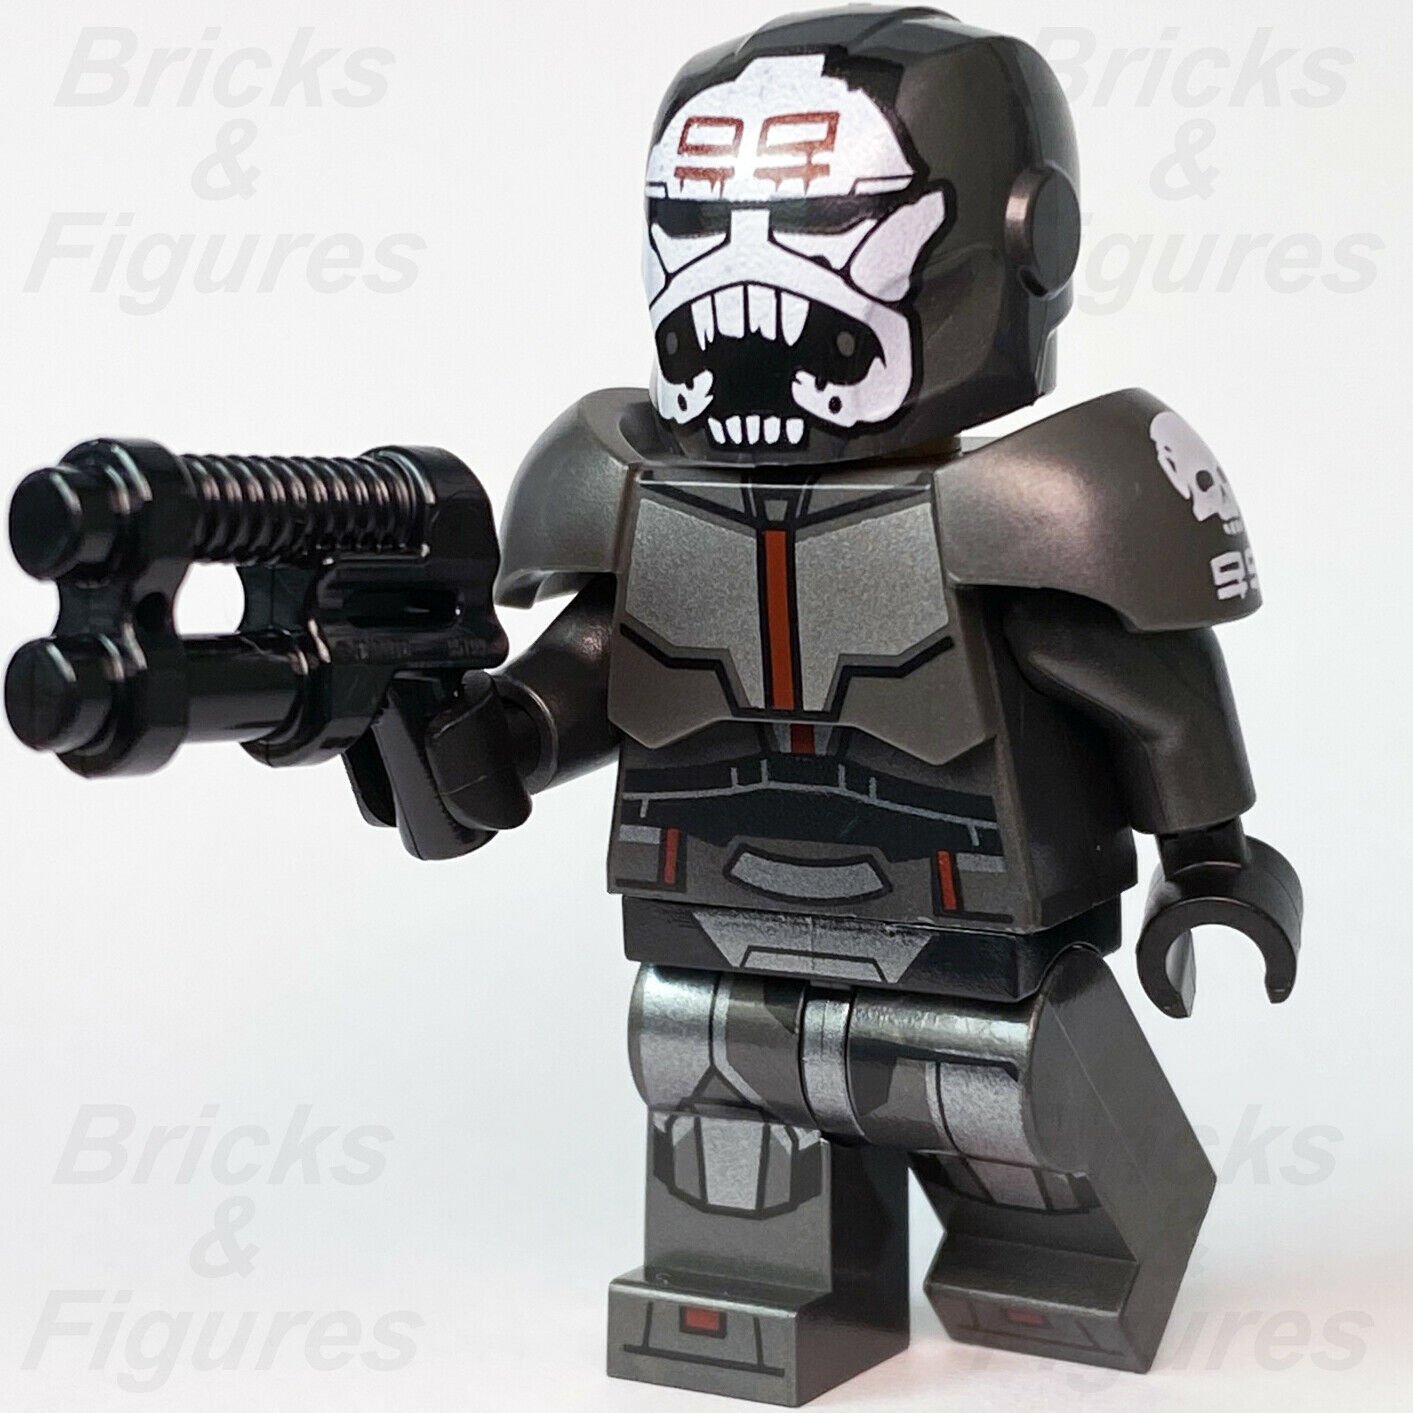 New Star Wars LEGO Wrecker The Bad Batch Clone Trooper Minifigure 75314 sw1149 - Bricks & Figures